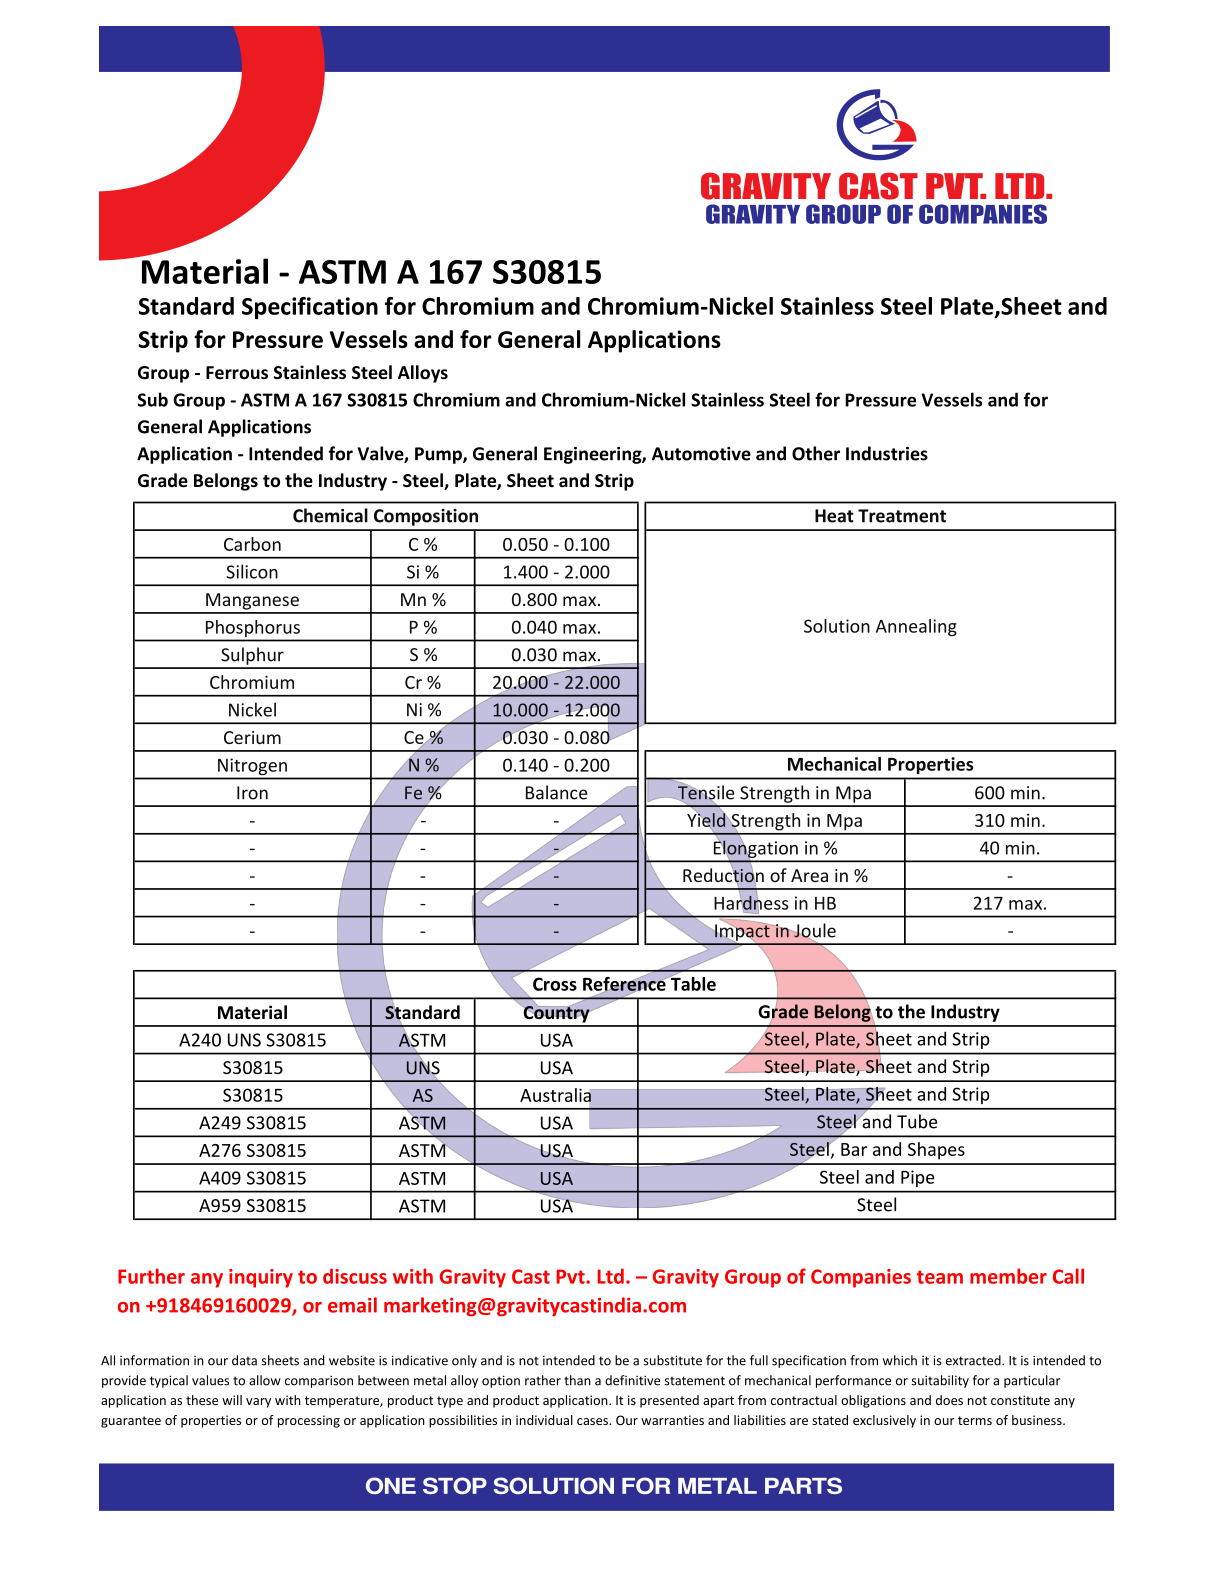 ASTM A 167 S30815.pdf